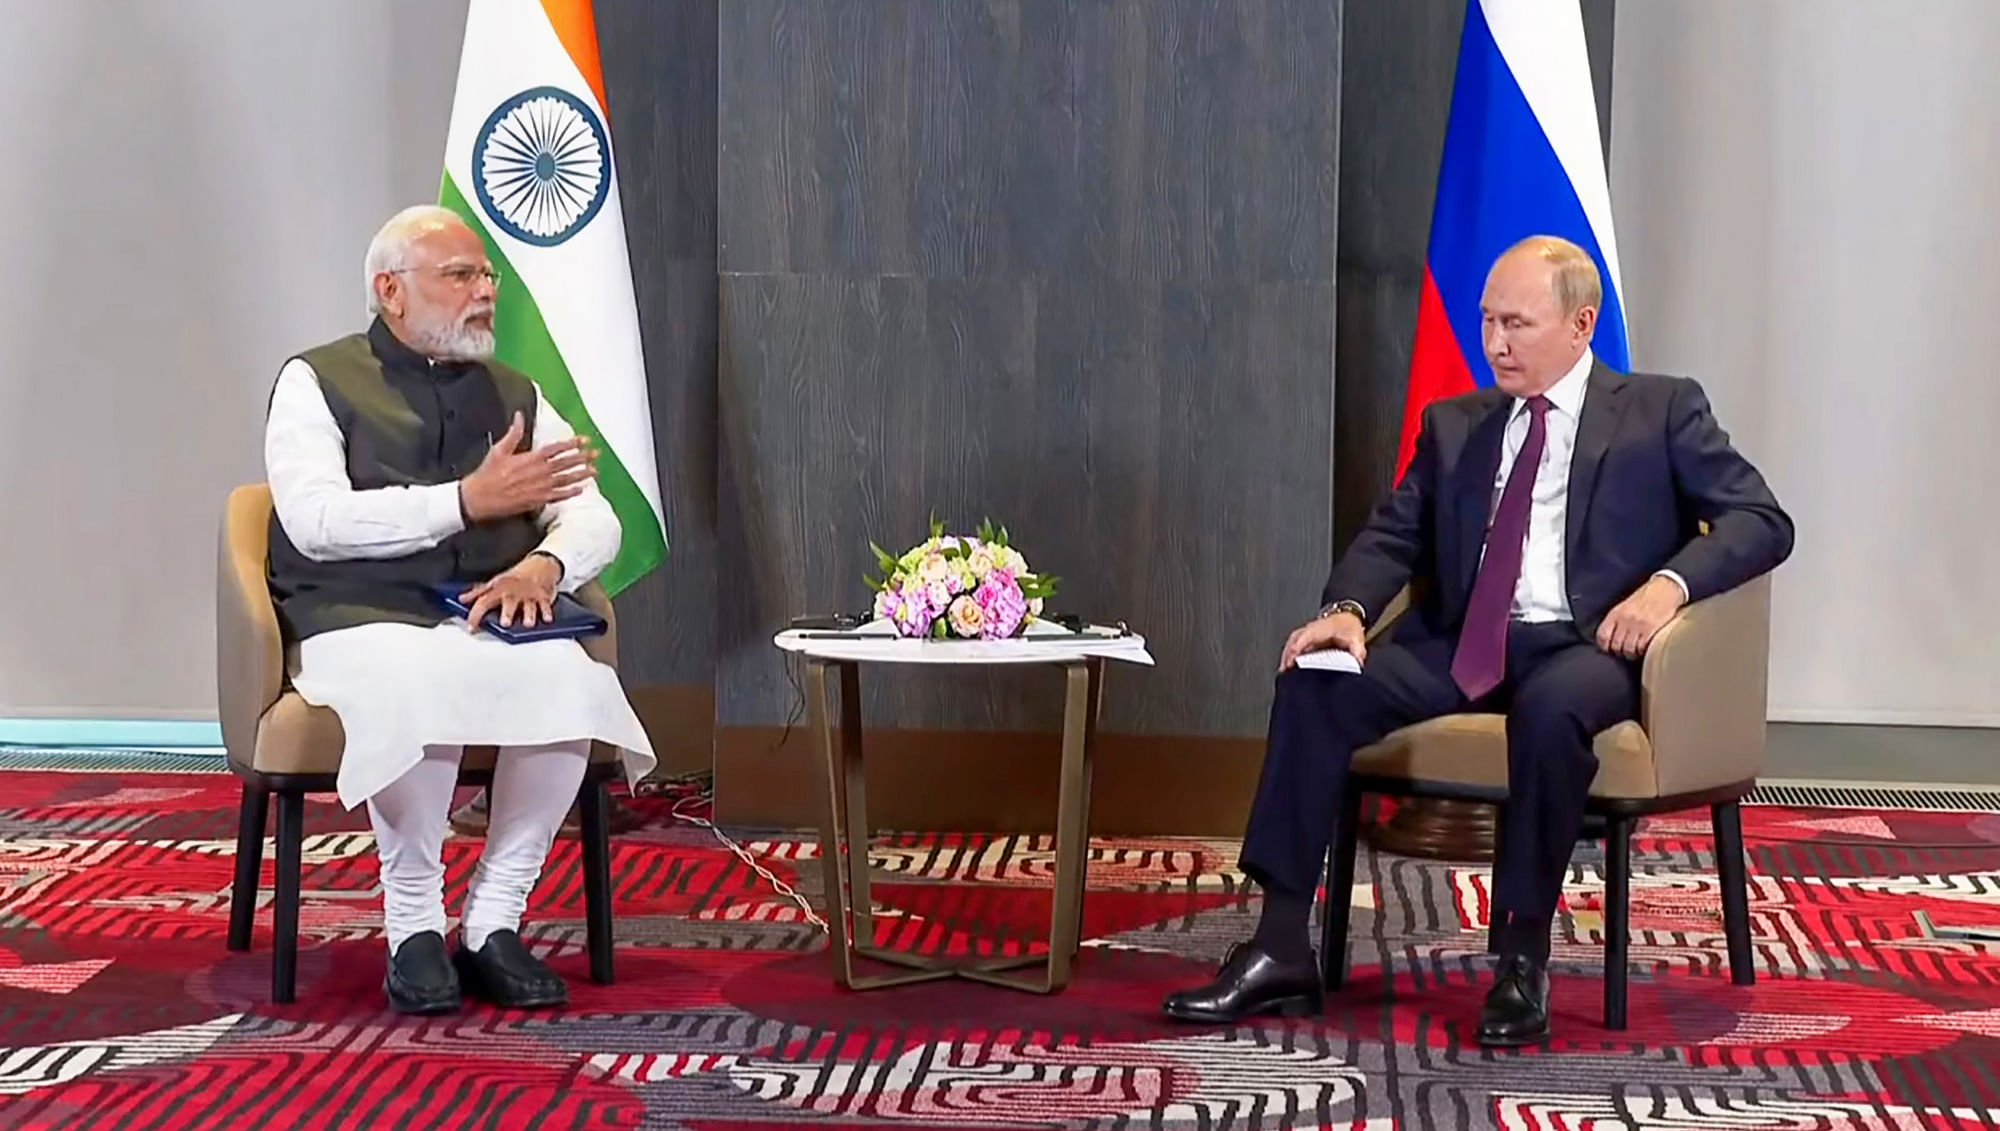 <div class="paragraphs"><p>US Media Praises Modi's Conversation with Putin Over Ukraine at SCO Summit</p></div>